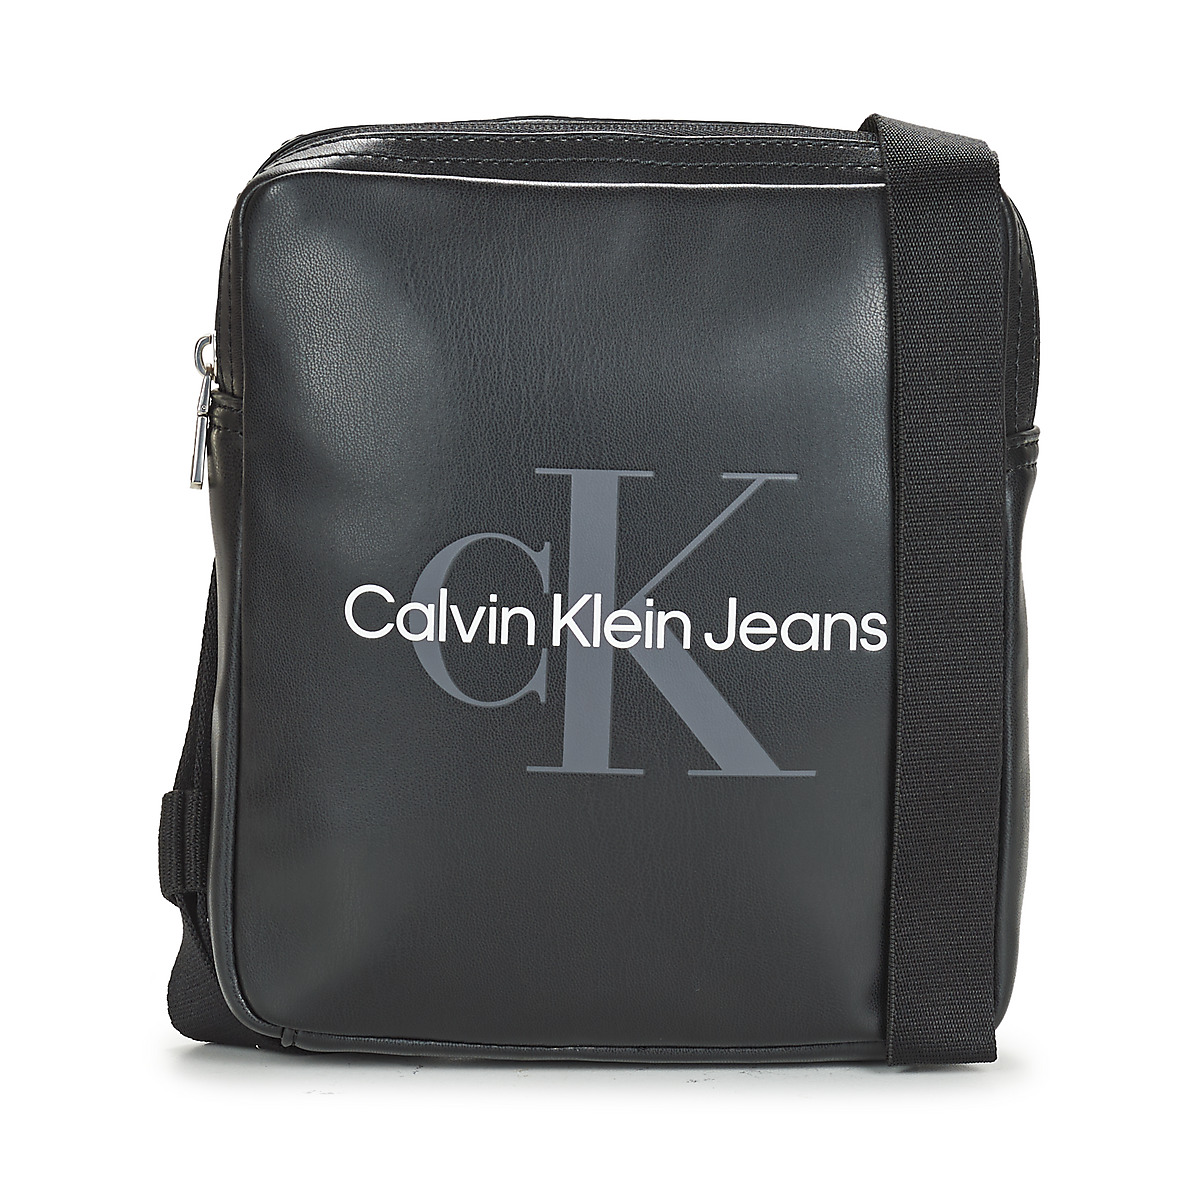 Taška Muži Malé kabelky Calvin Klein Jeans MONOGRAM SOFT REPORTER18 Černá